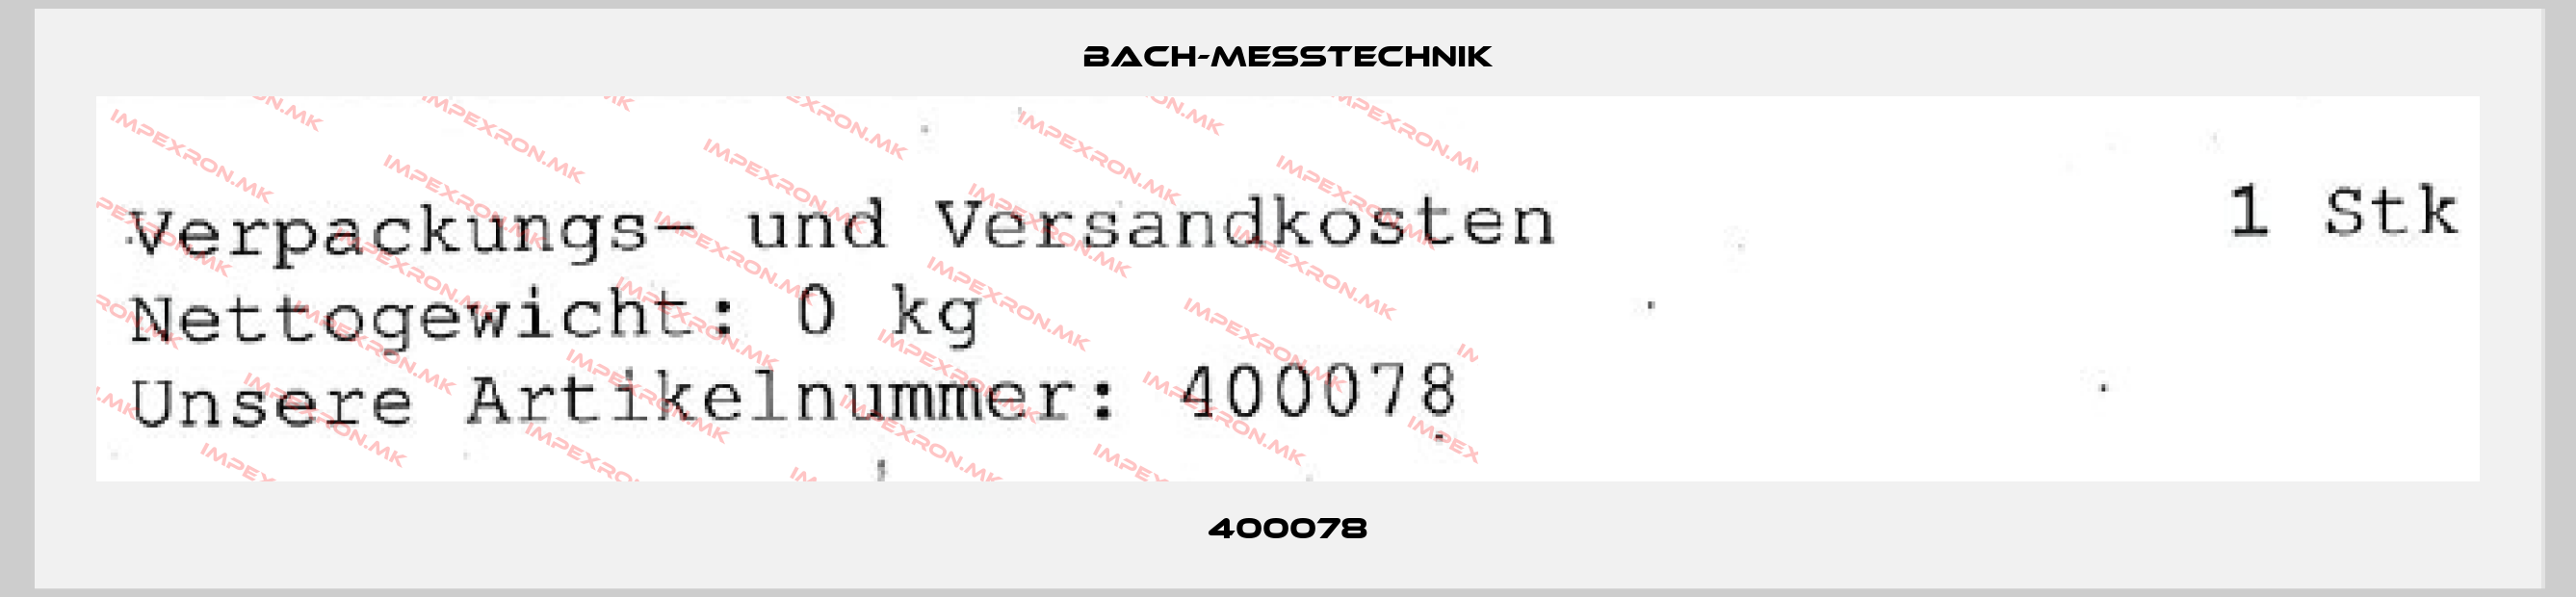 Bach-messtechnik-400078price